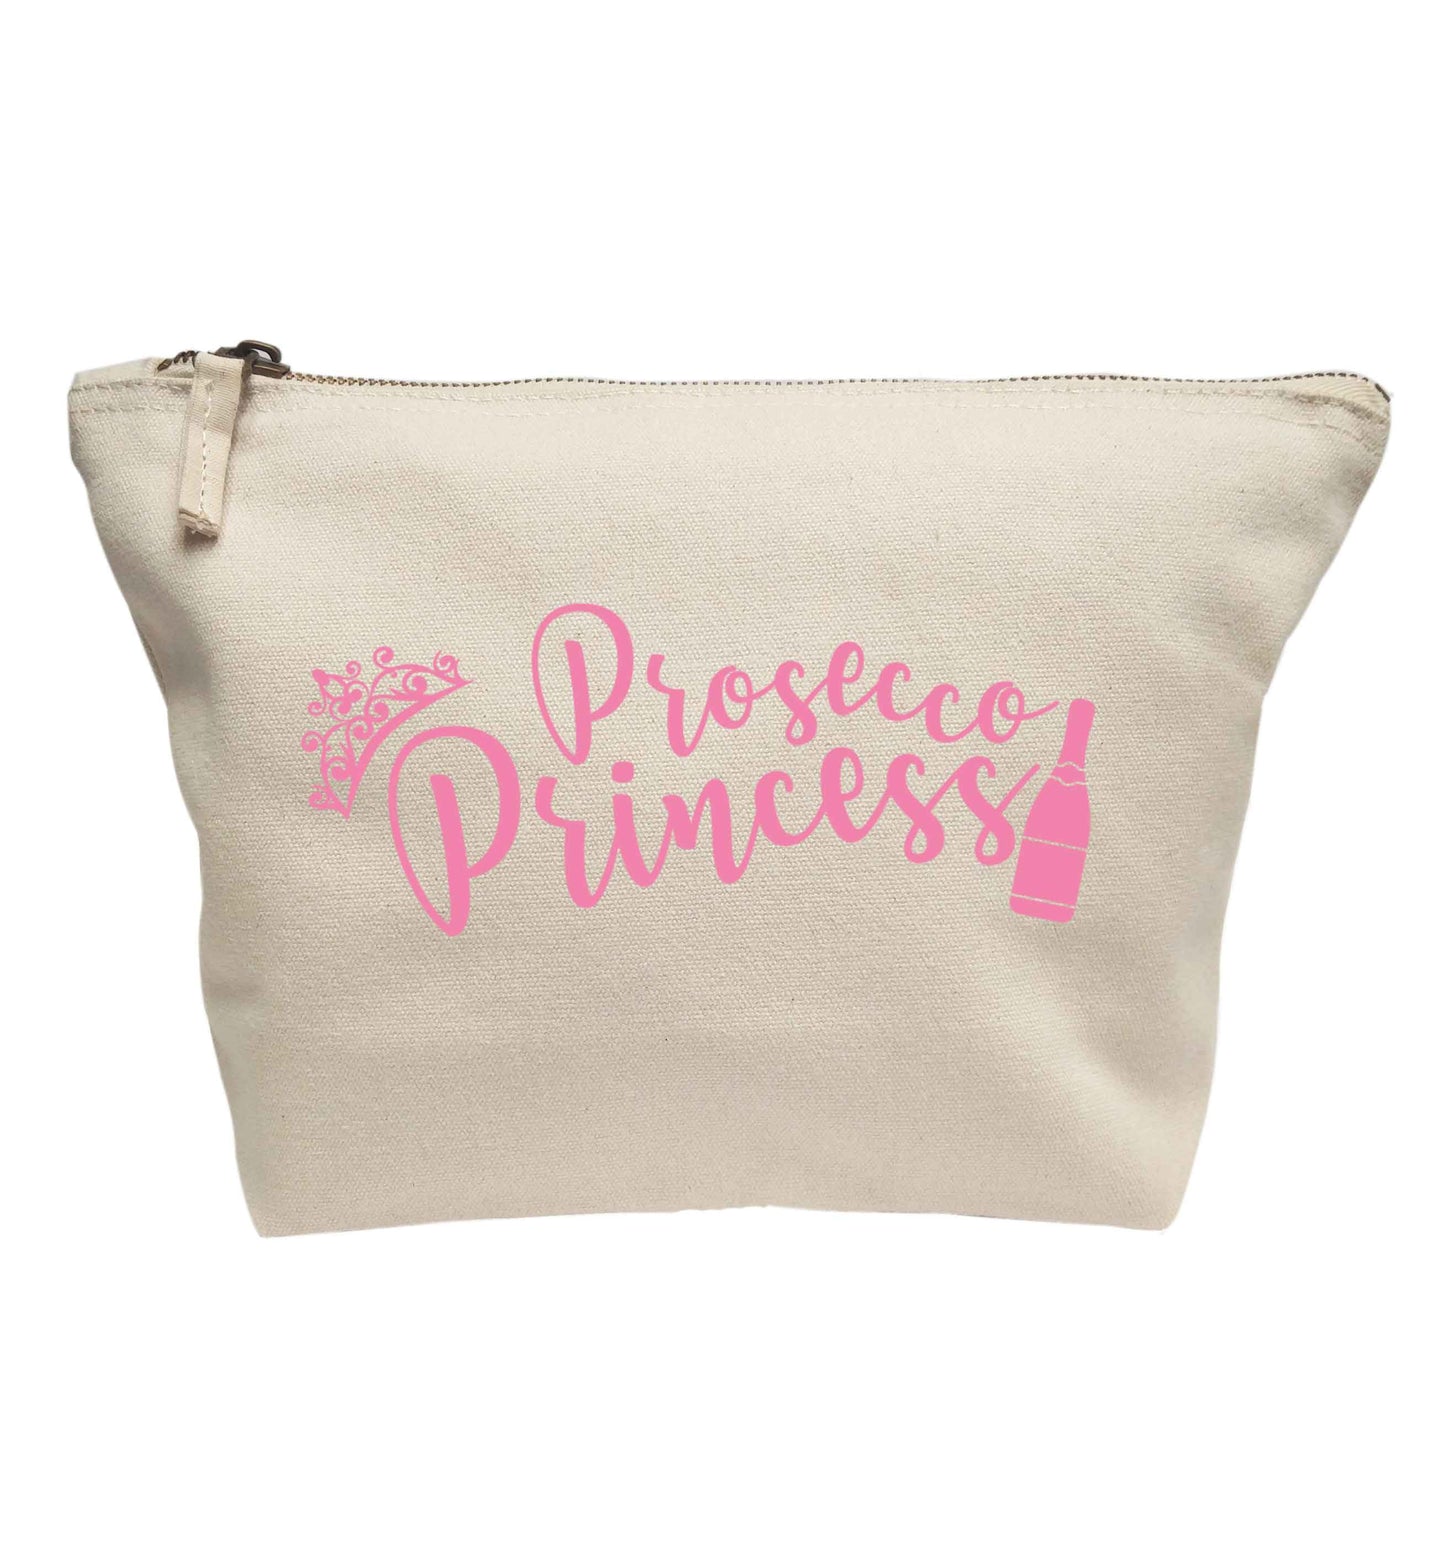 Prosecco princess | makeup / wash bag